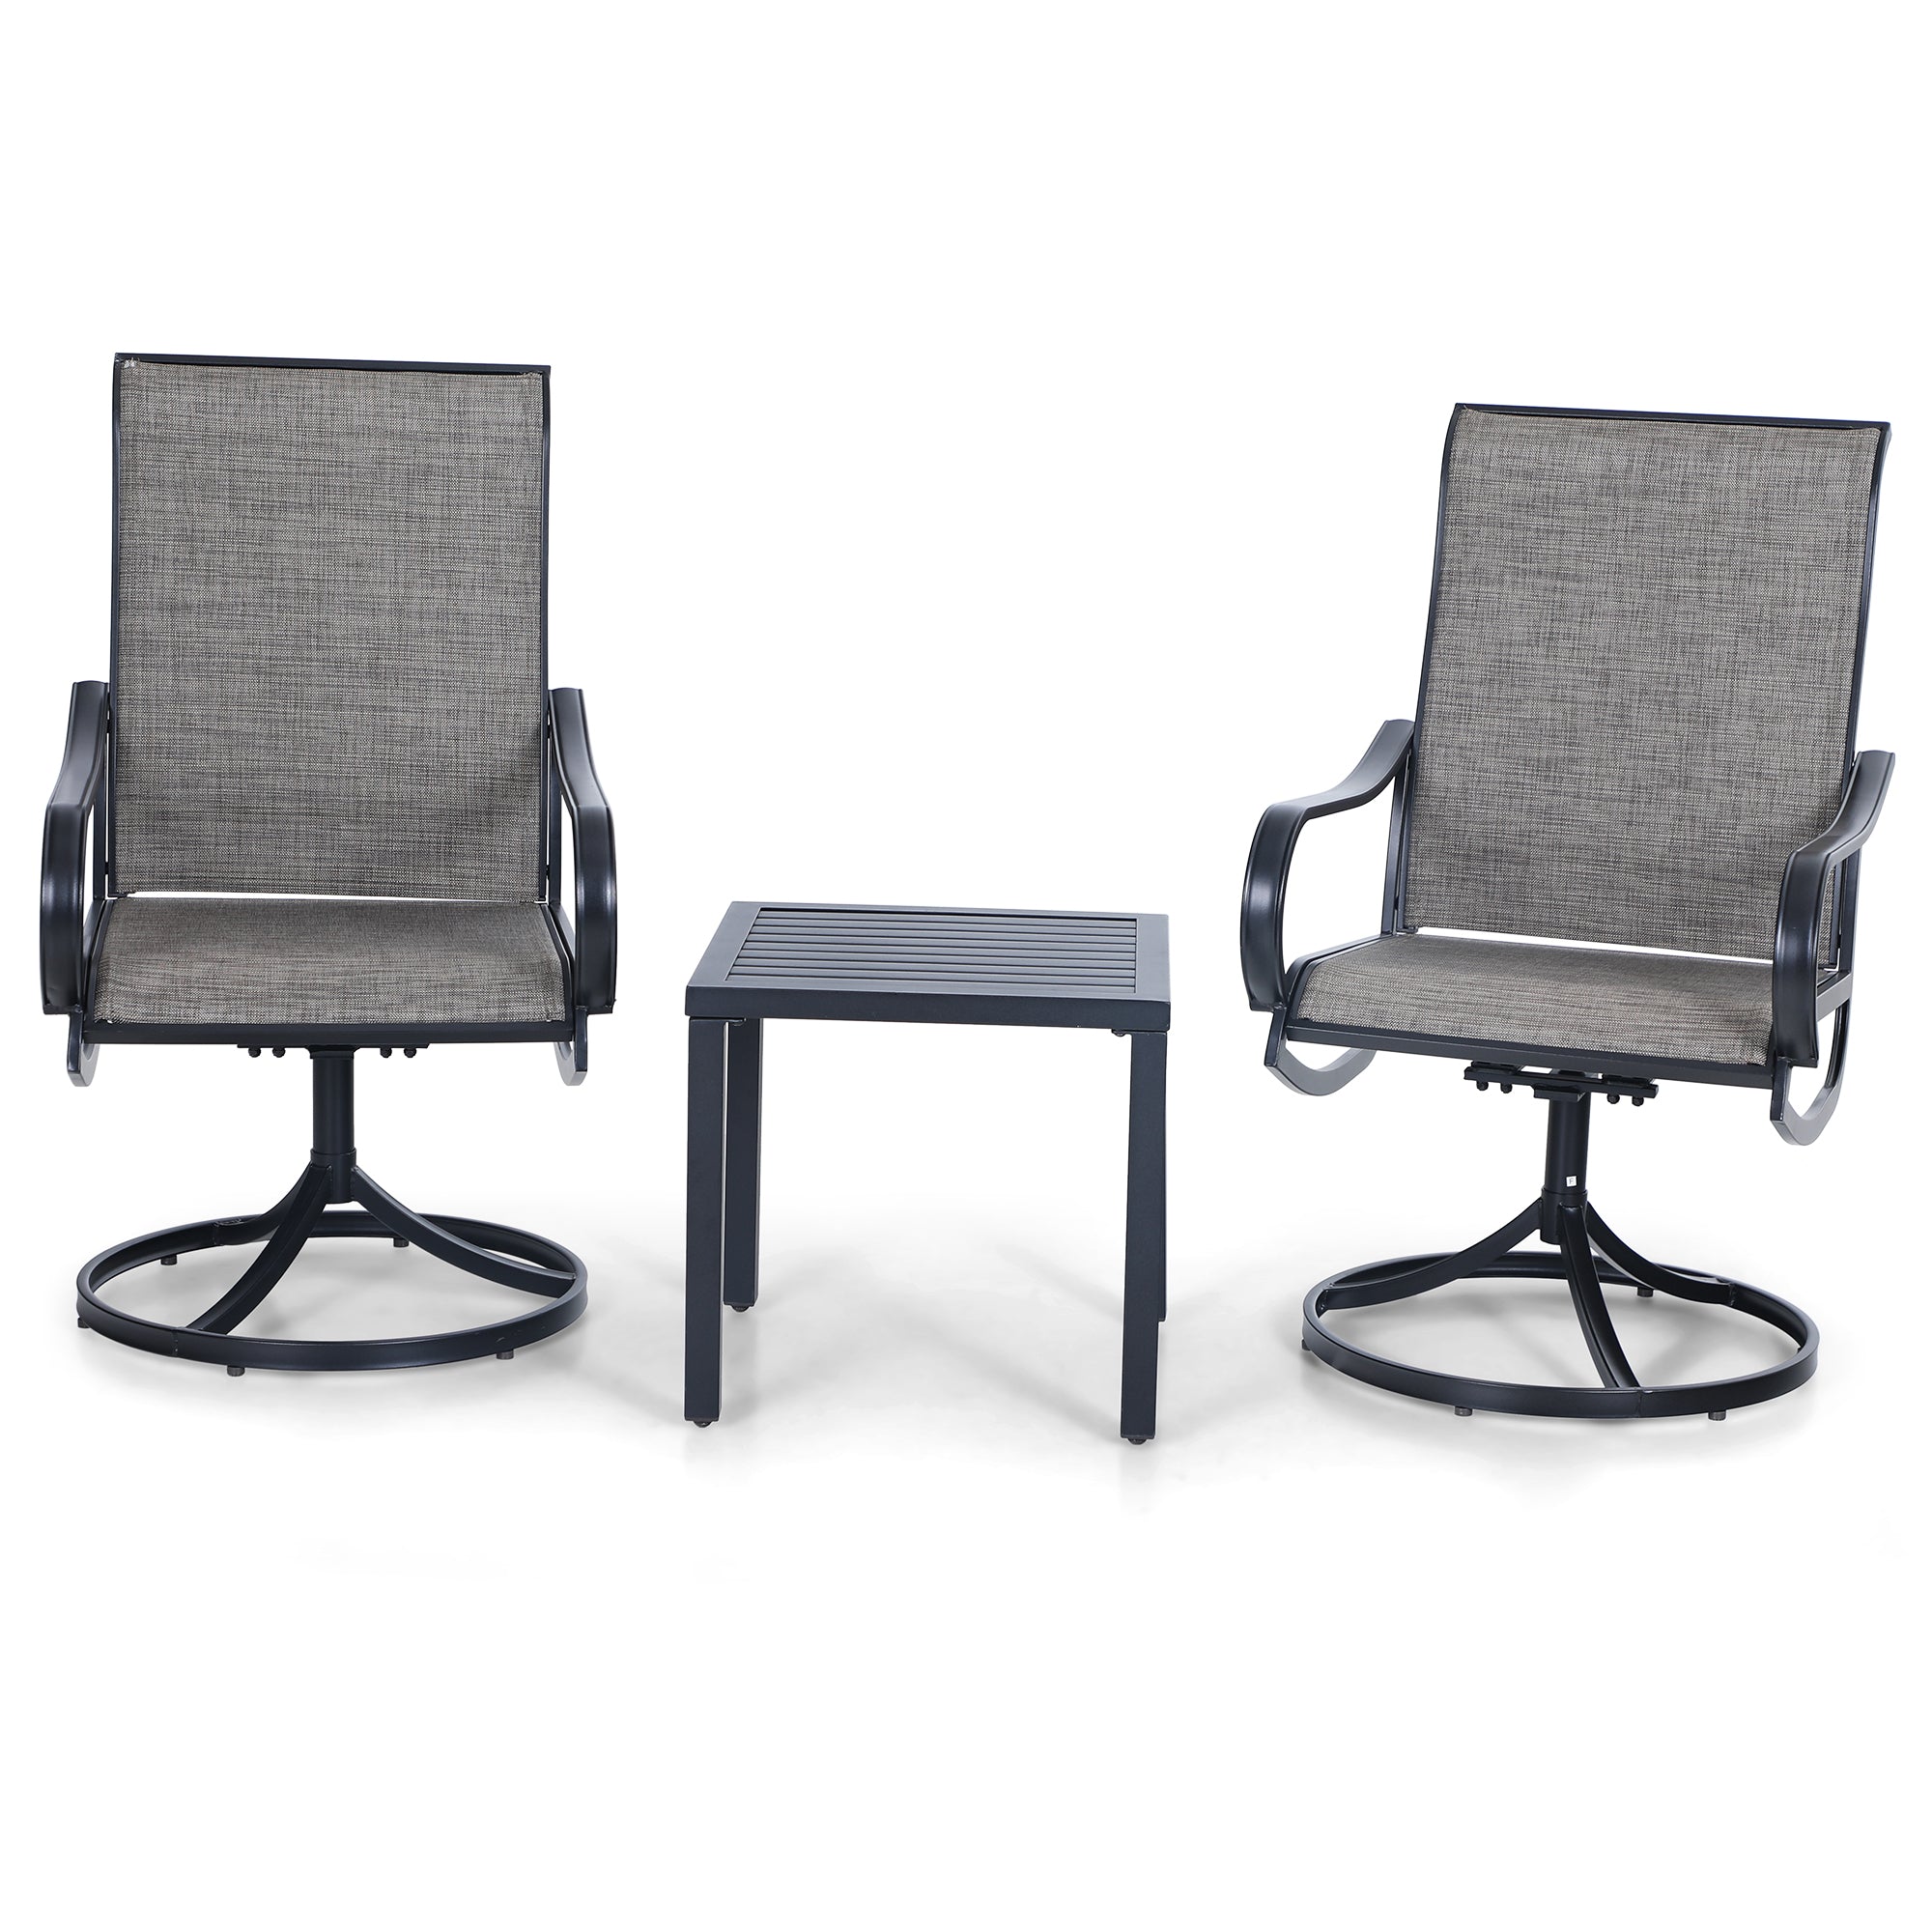 PHI VILLA 3-Piece Patio Bistro Set Small Square Side Table & Textilene Swivel Chairs